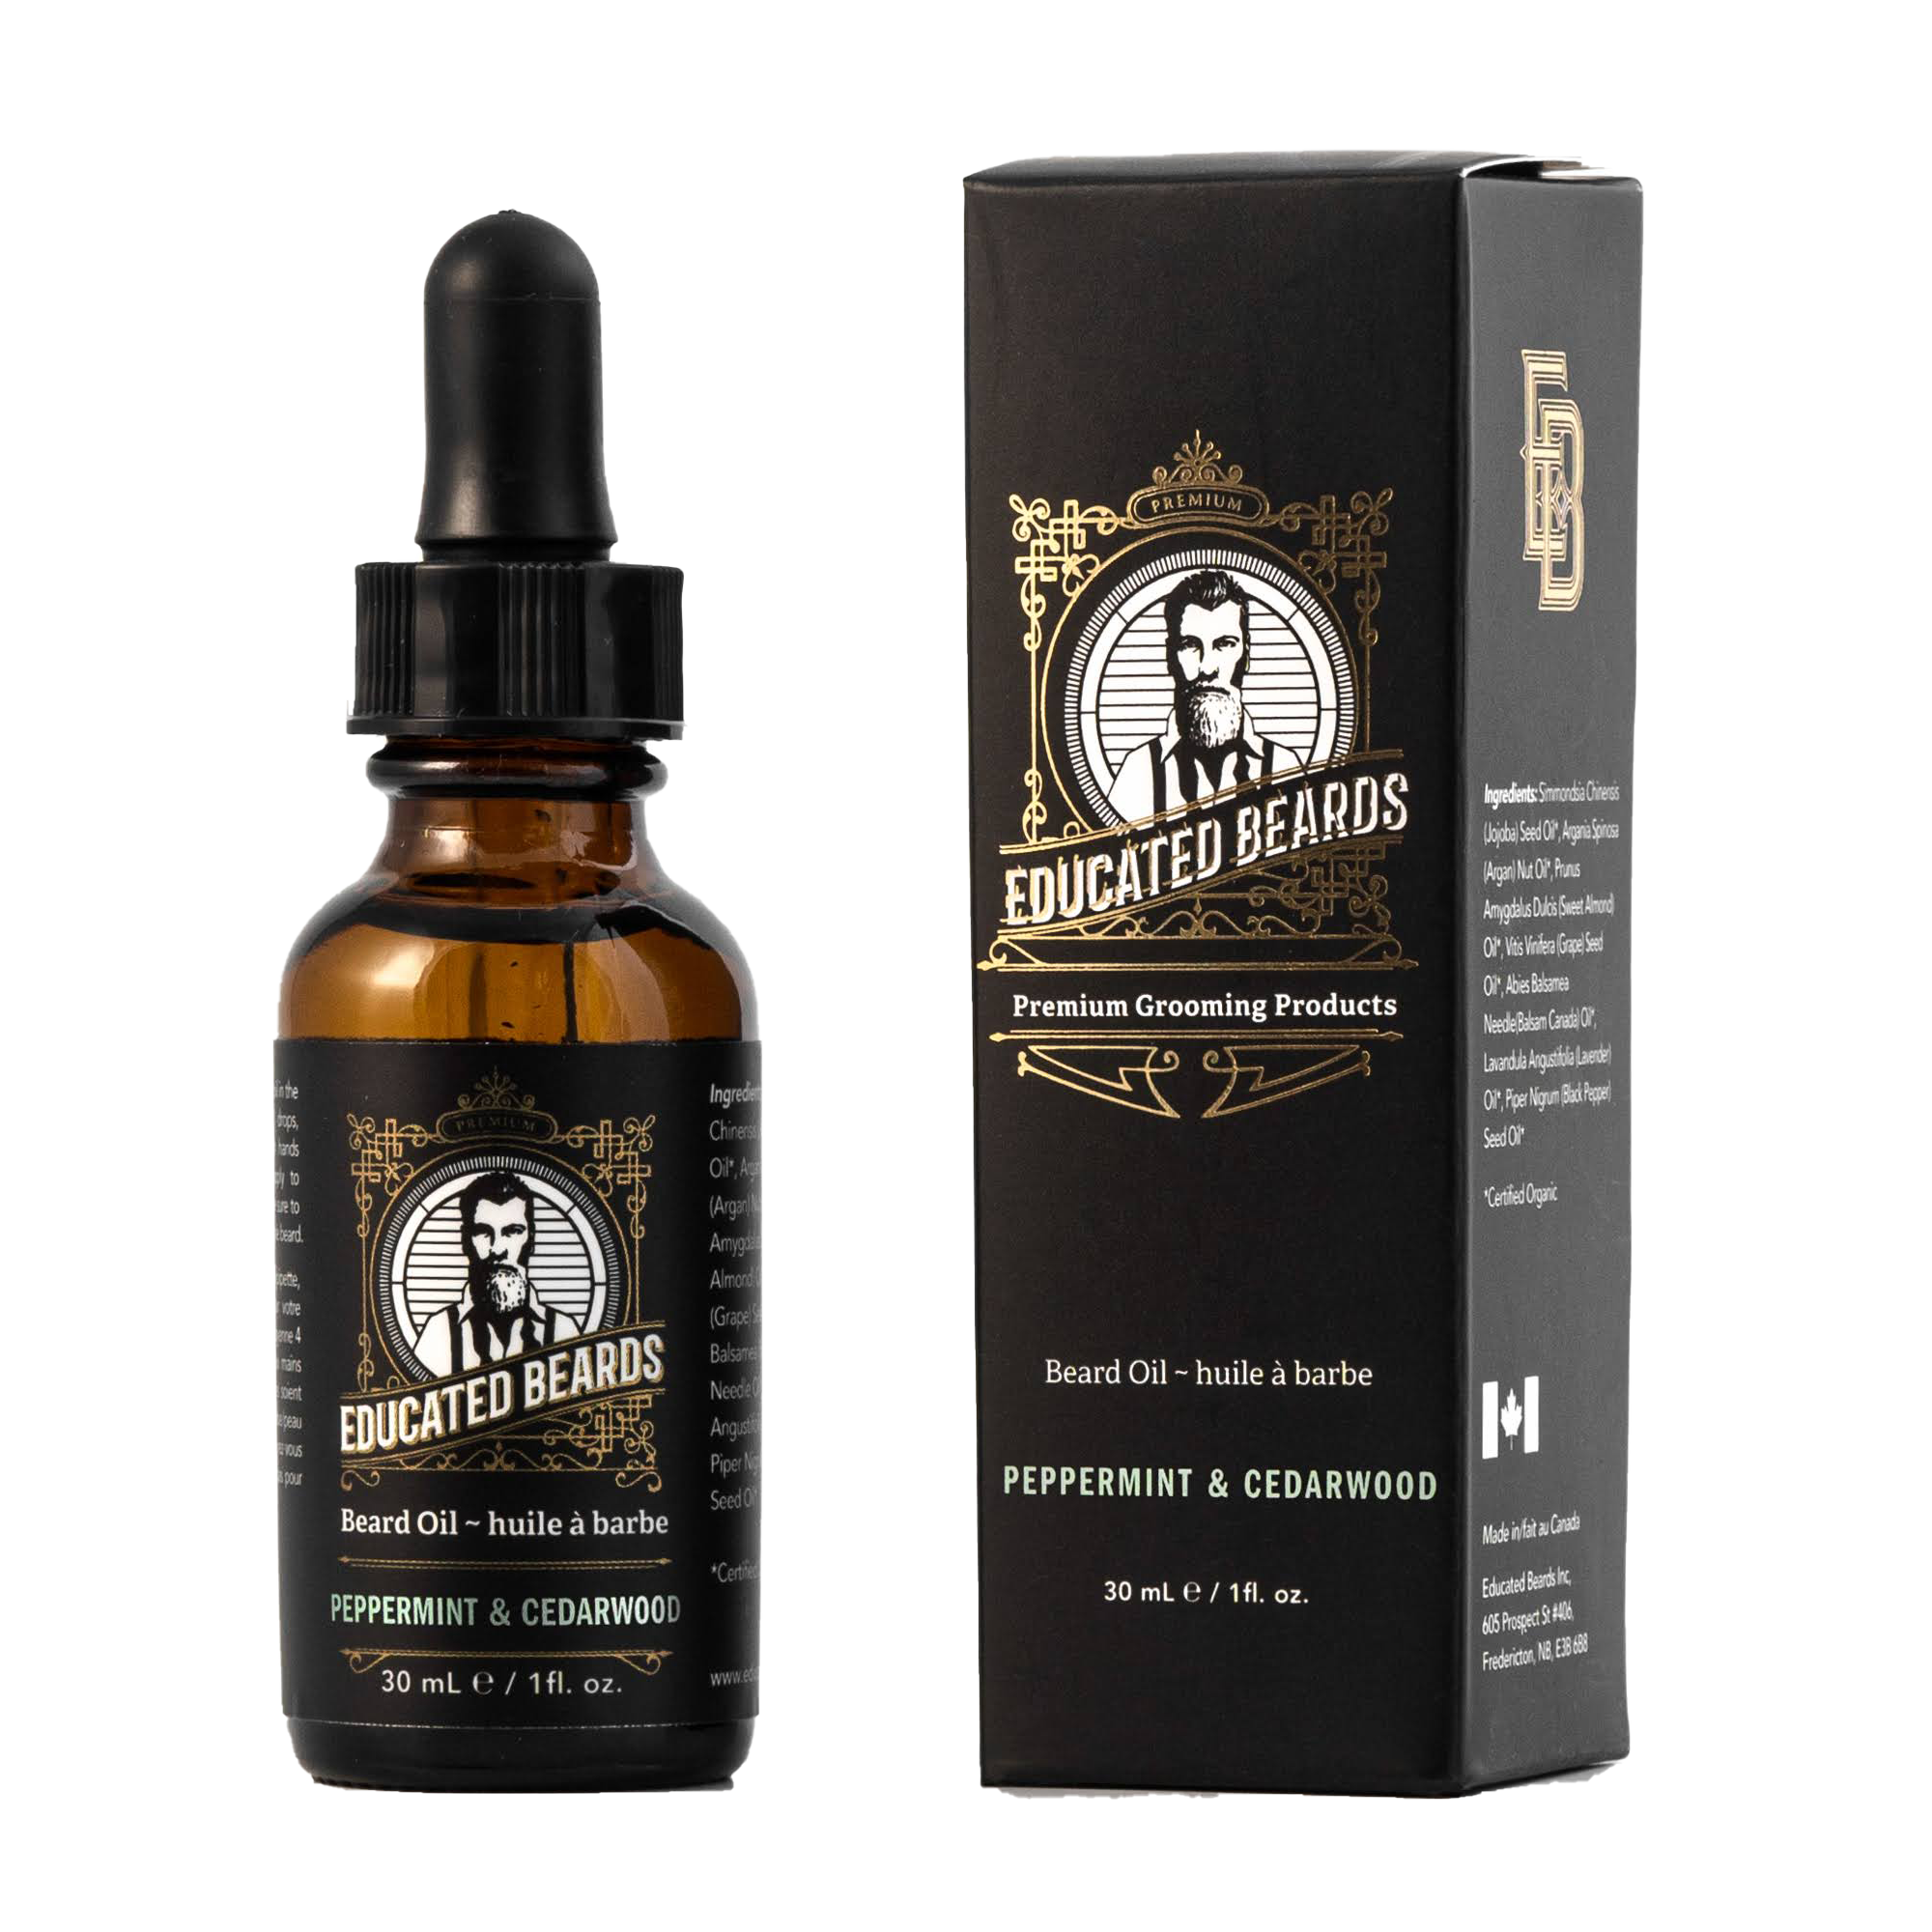 Educated Beards - Peppermint & Cedarwood Beard Oil